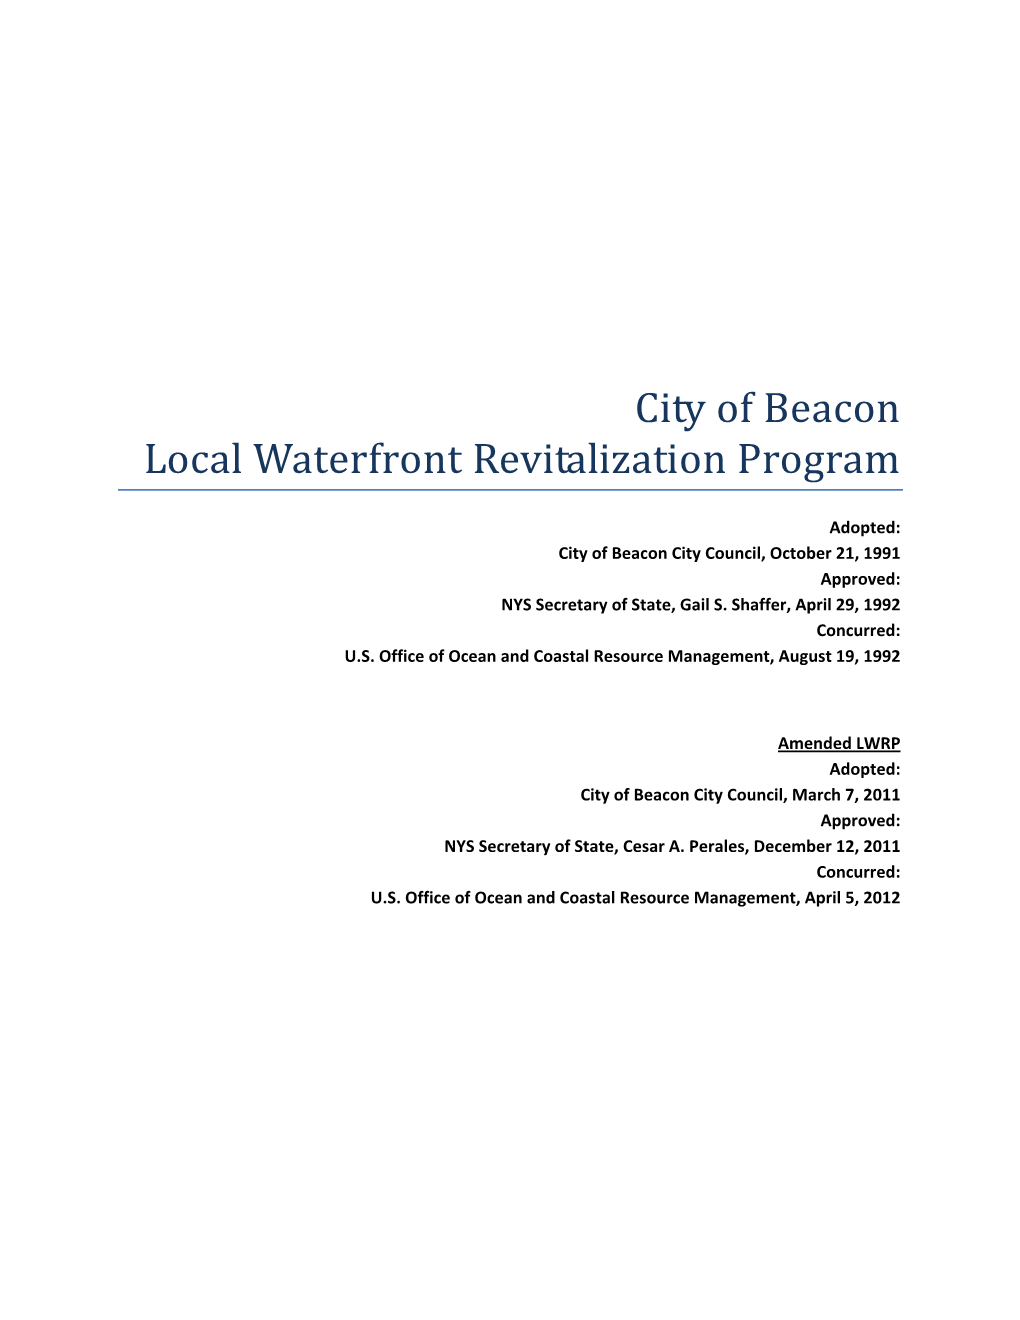 Local Waterfront Revitalization Program (LWRP)